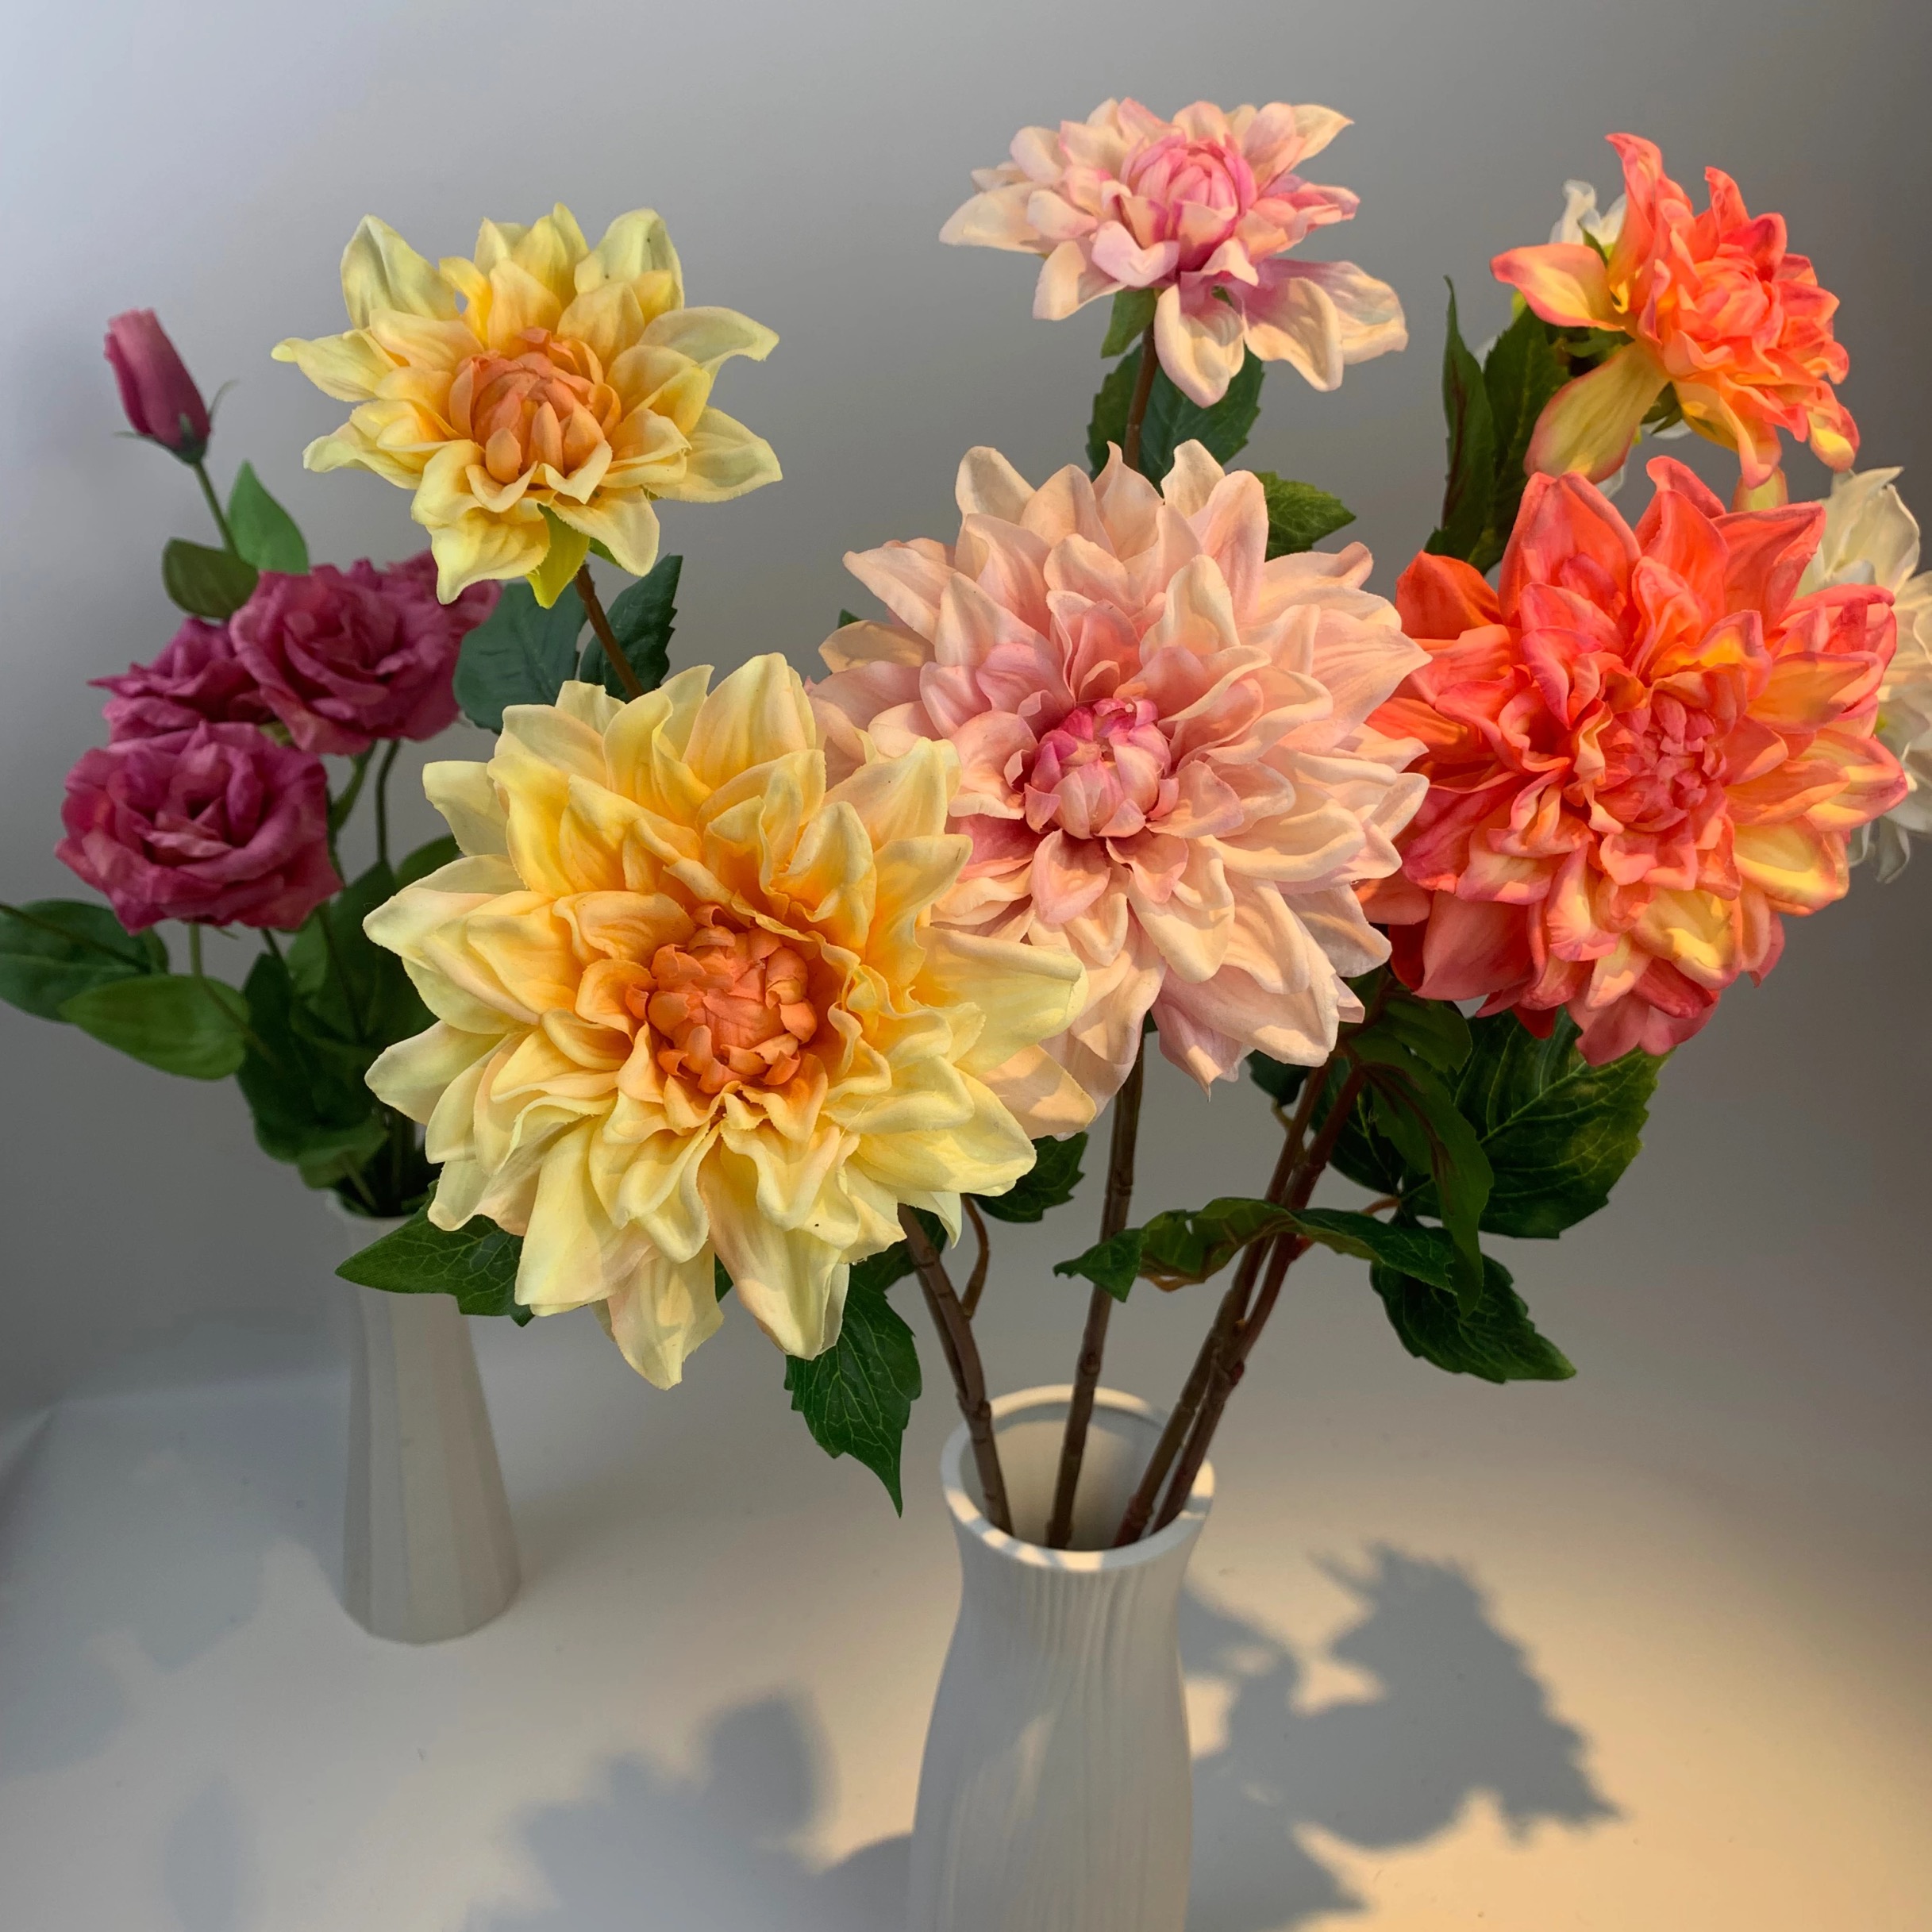 Artificial Dahlia Flower Real Touch dahlia Flowers For Wedding Centerpiece Decoration